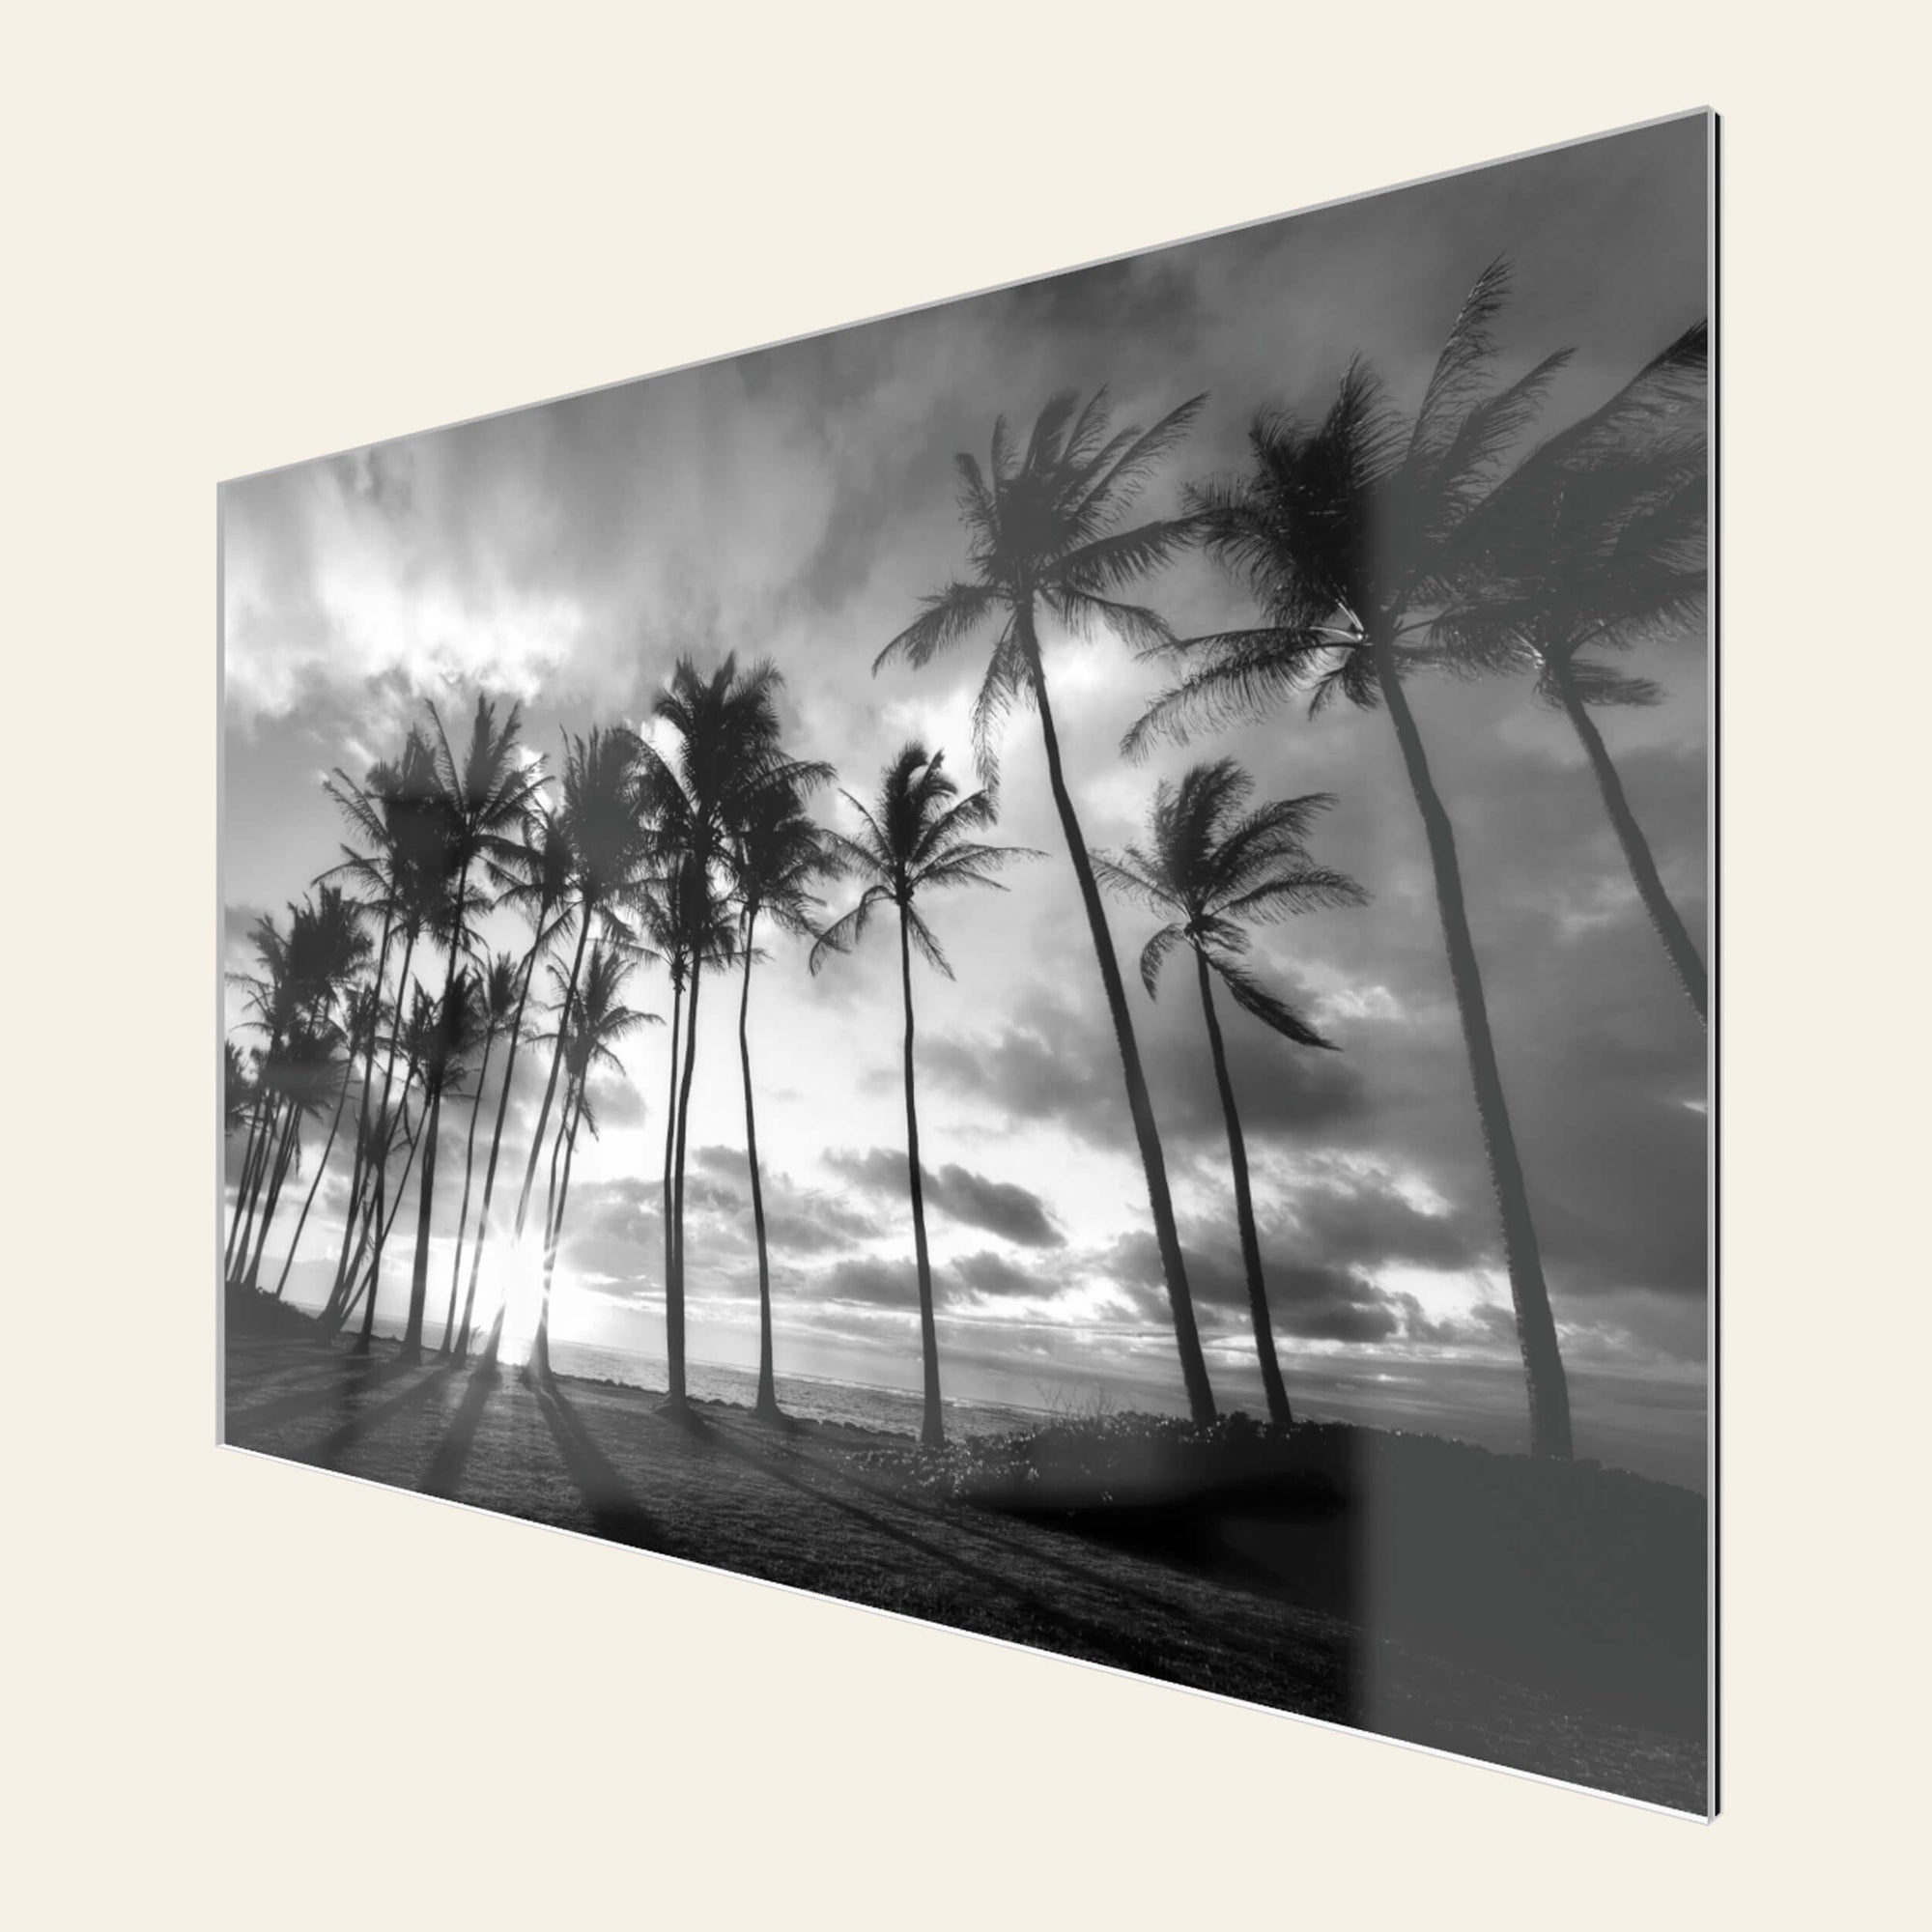 A TruLife acrylic palm tree picture at sunrise in Kapaa, Kauai.